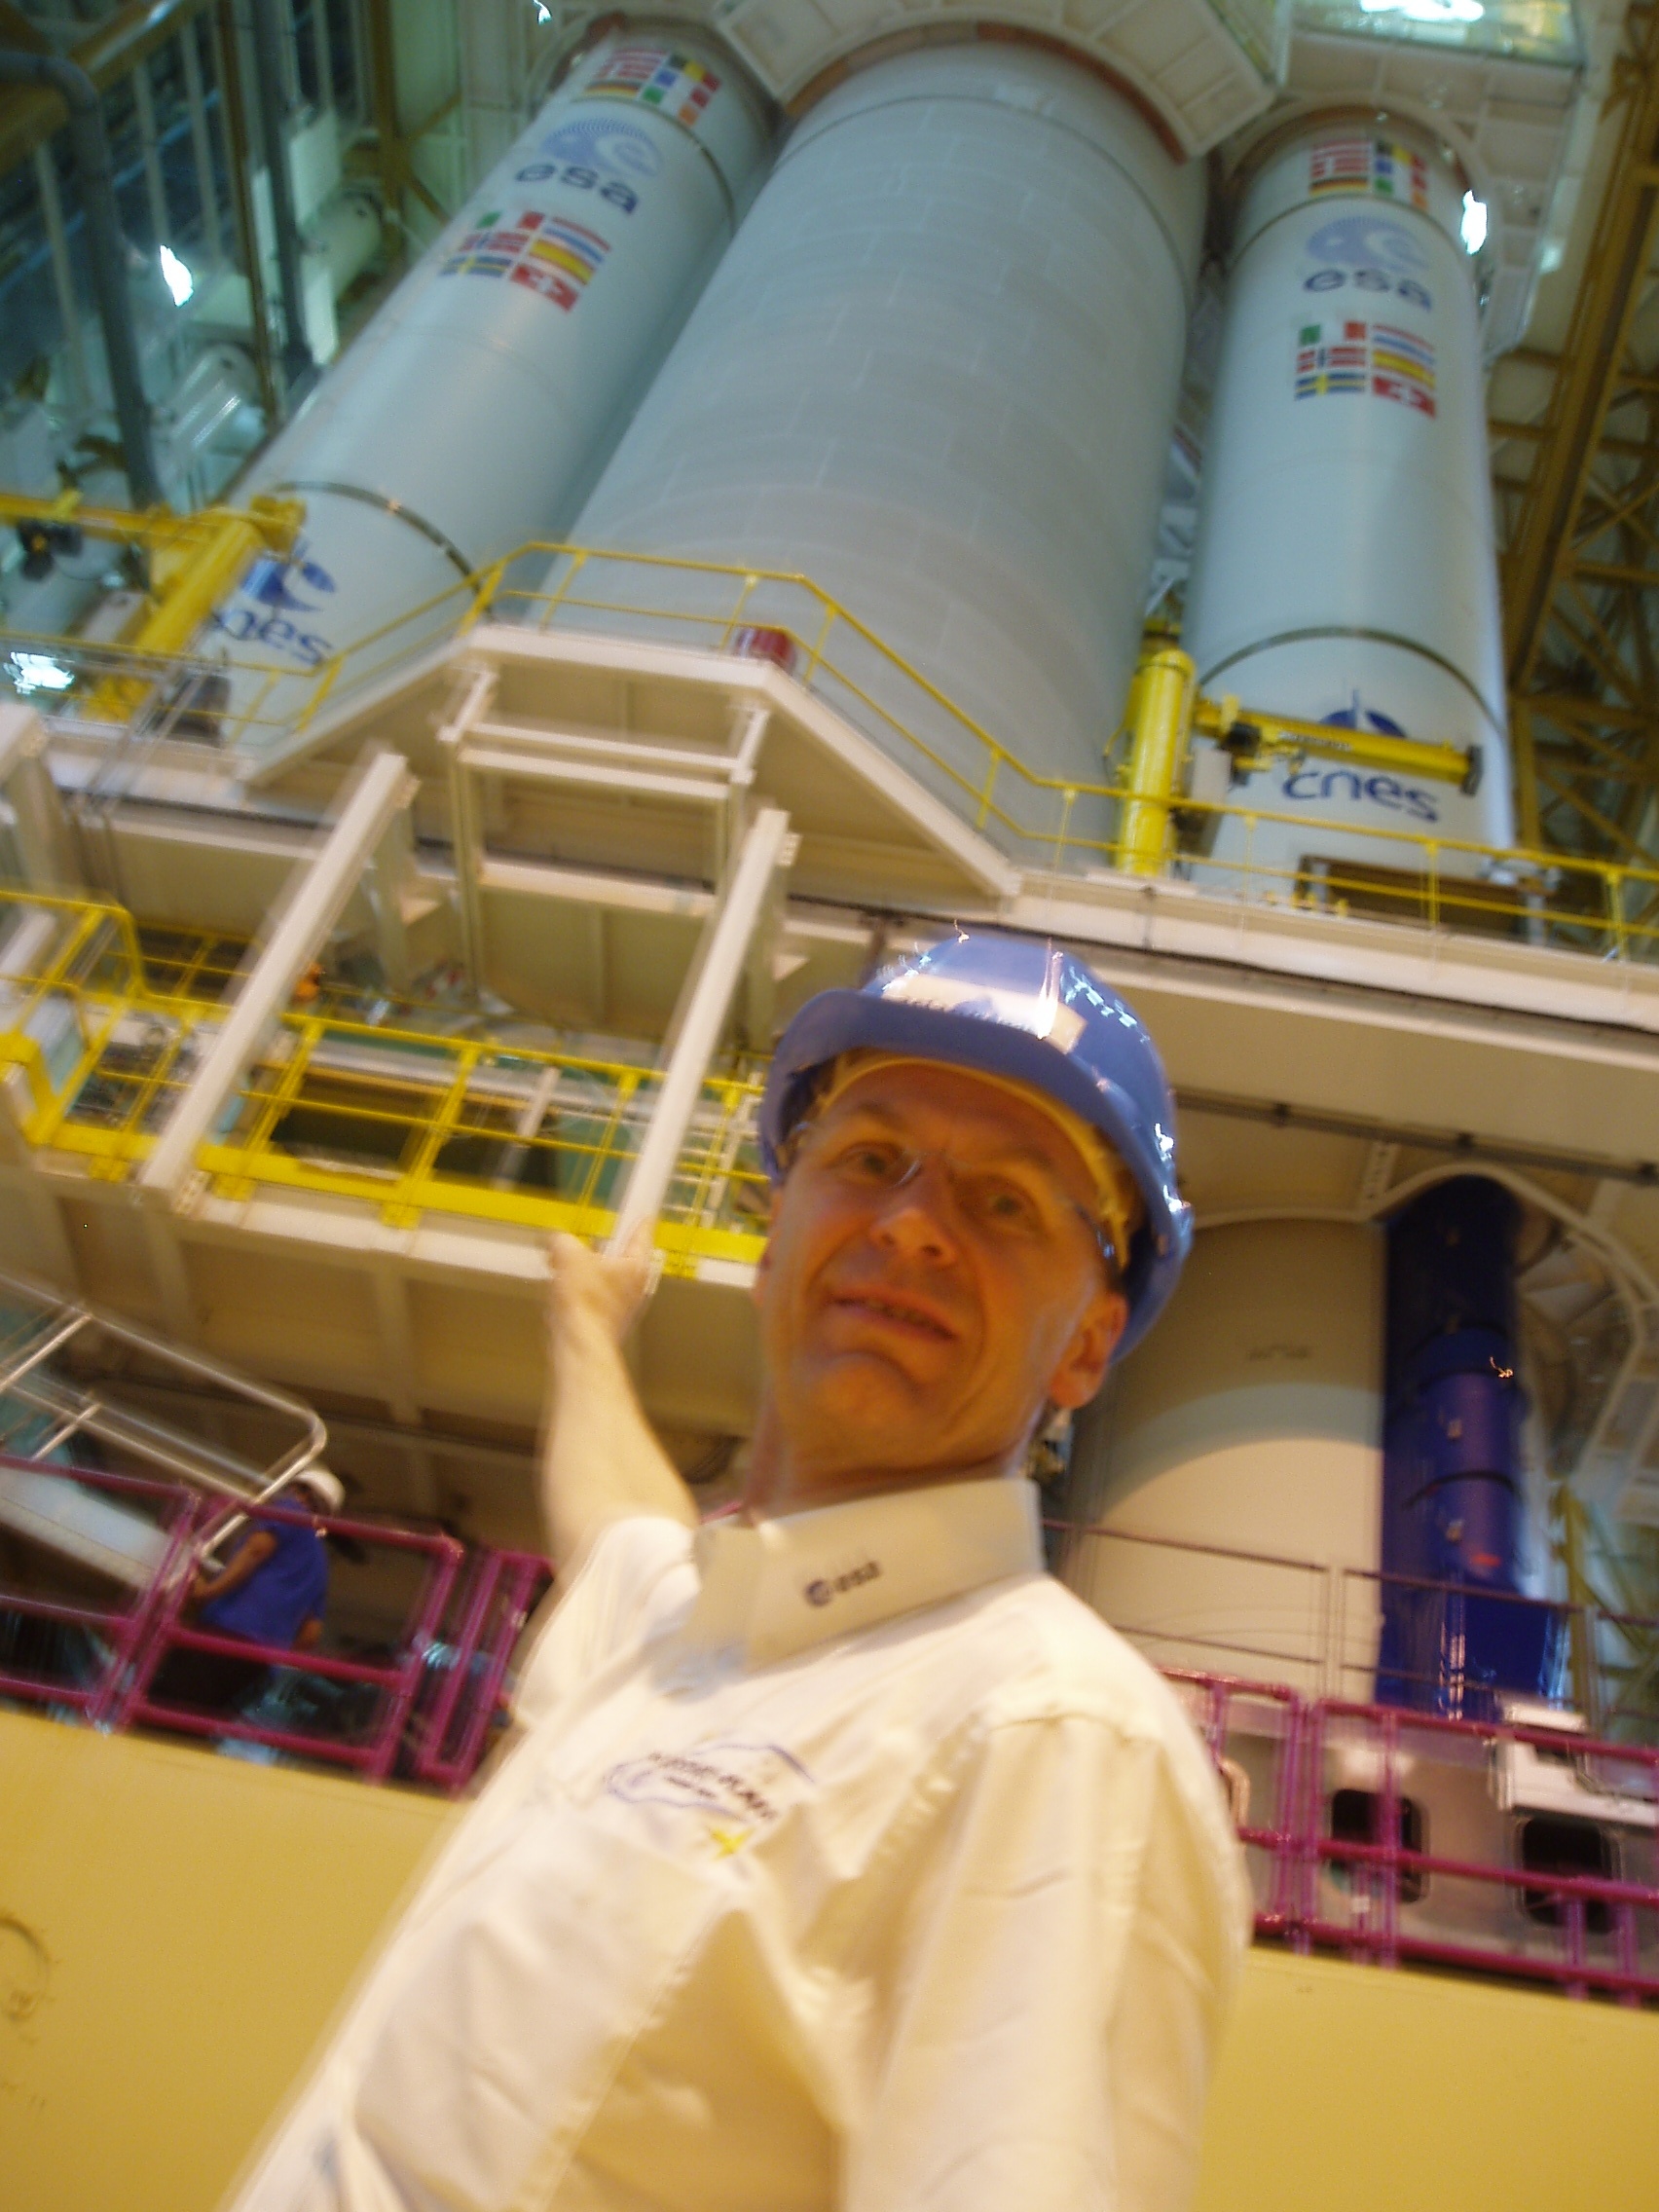 Ariane 5 ECA launcher (v188) and Göran Pilbratt (Herschel Project Scientist) inside the BIL